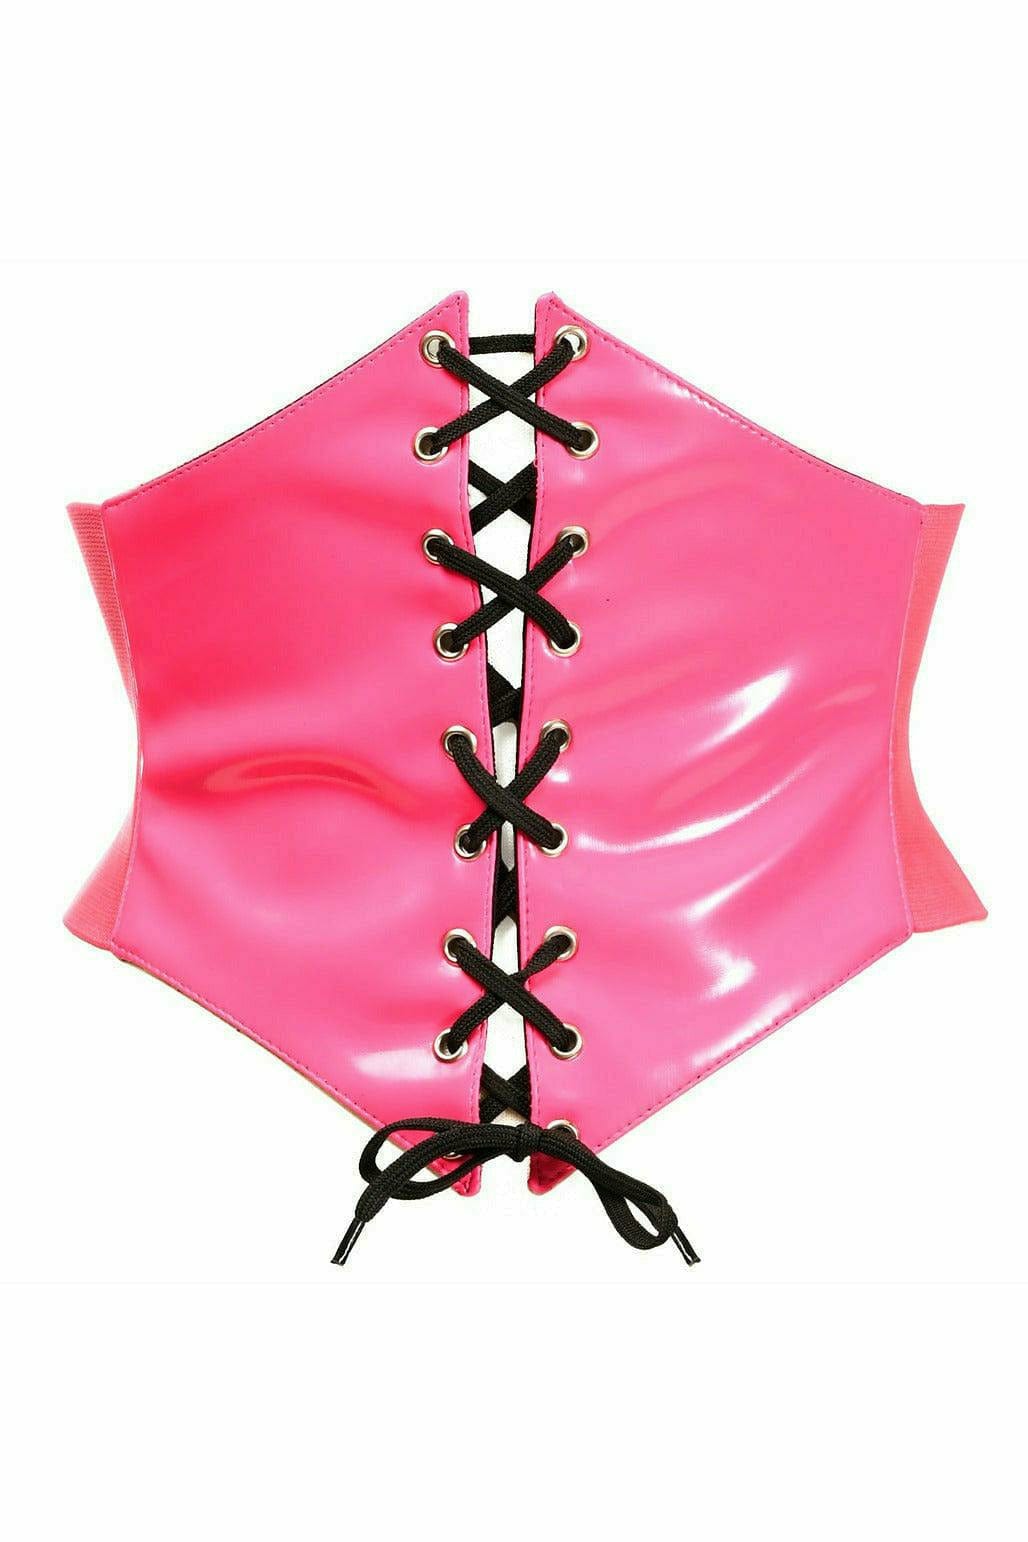 Sexy Hot Pink Patent Corset Belt Cincher Musotica.com